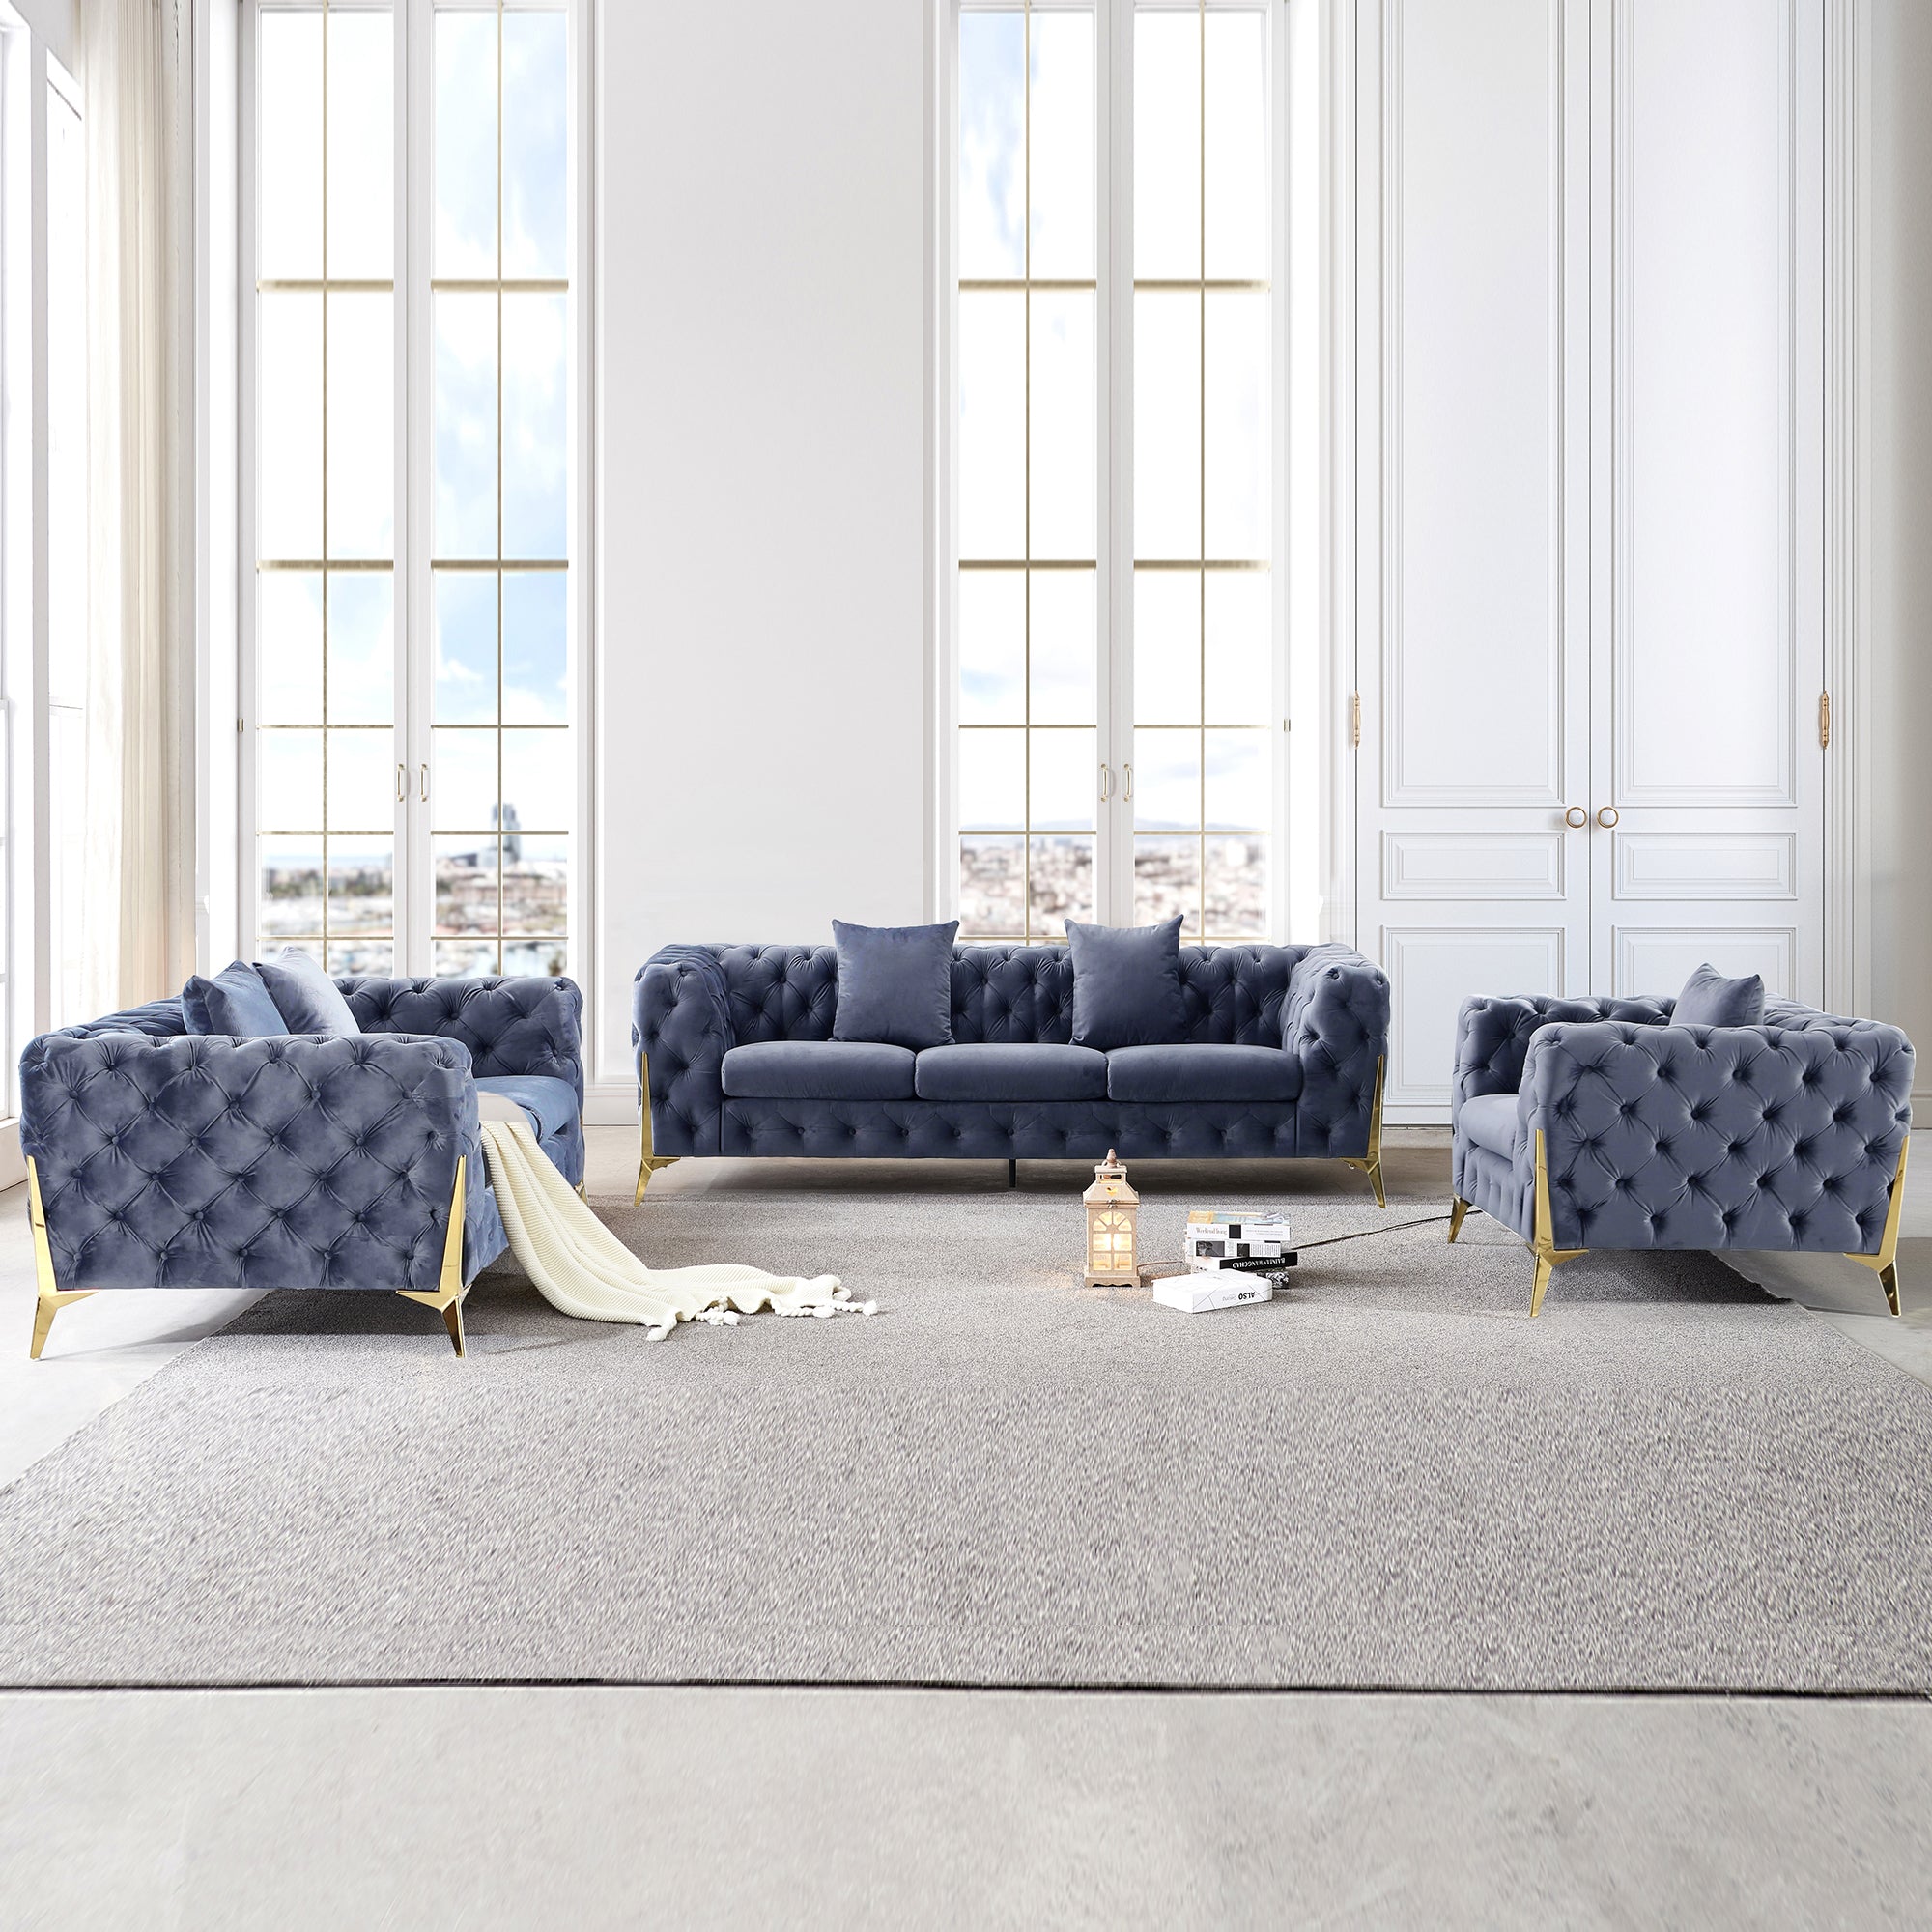 August Grove Living Room Set Sofa Lovesweat Armchair Grey